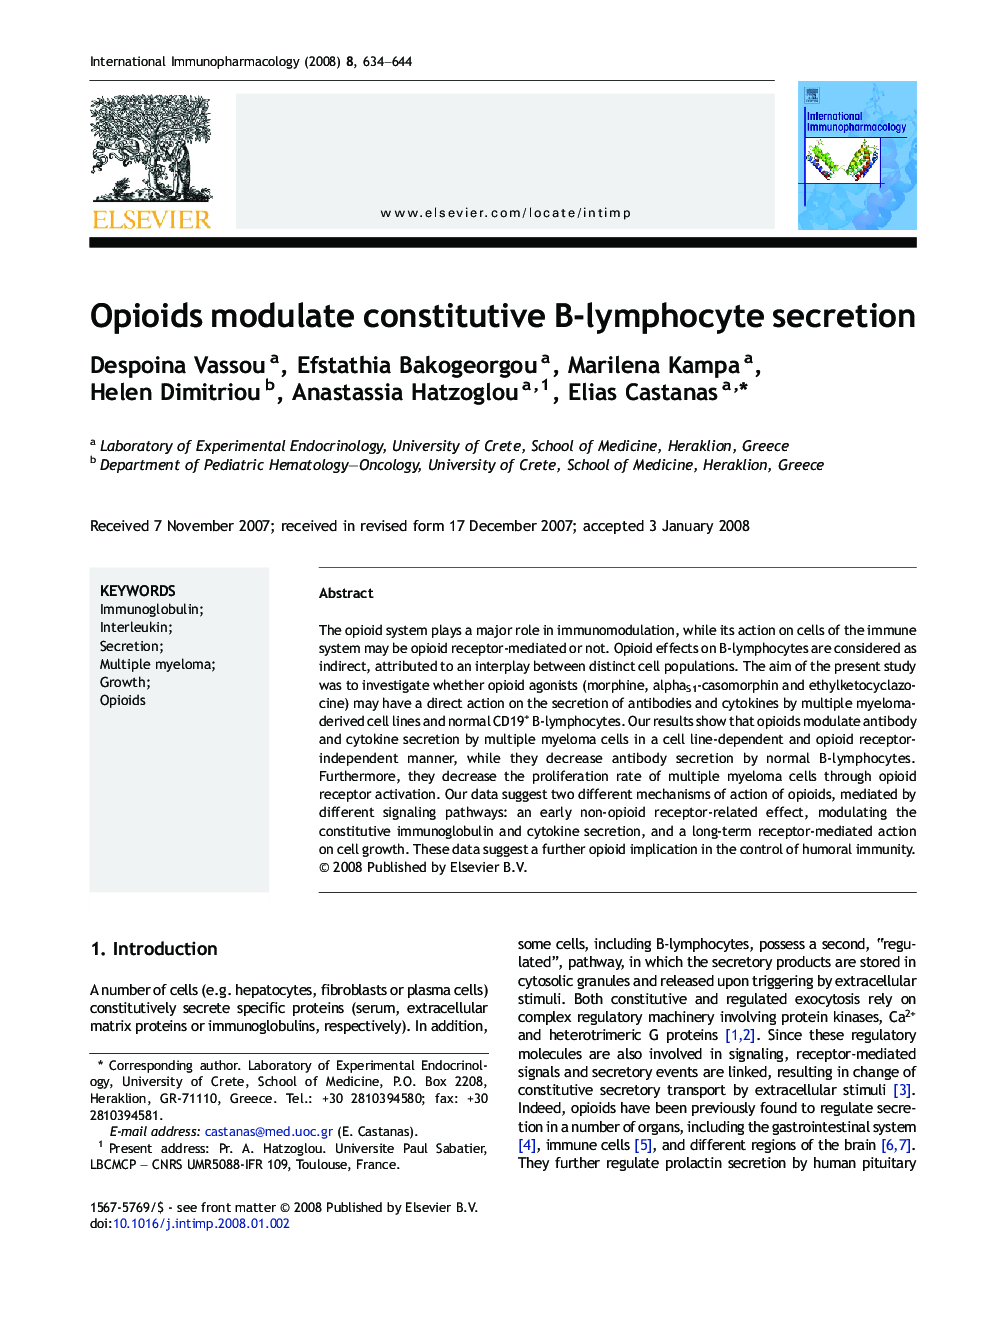 Opioids modulate constitutive B-lymphocyte secretion